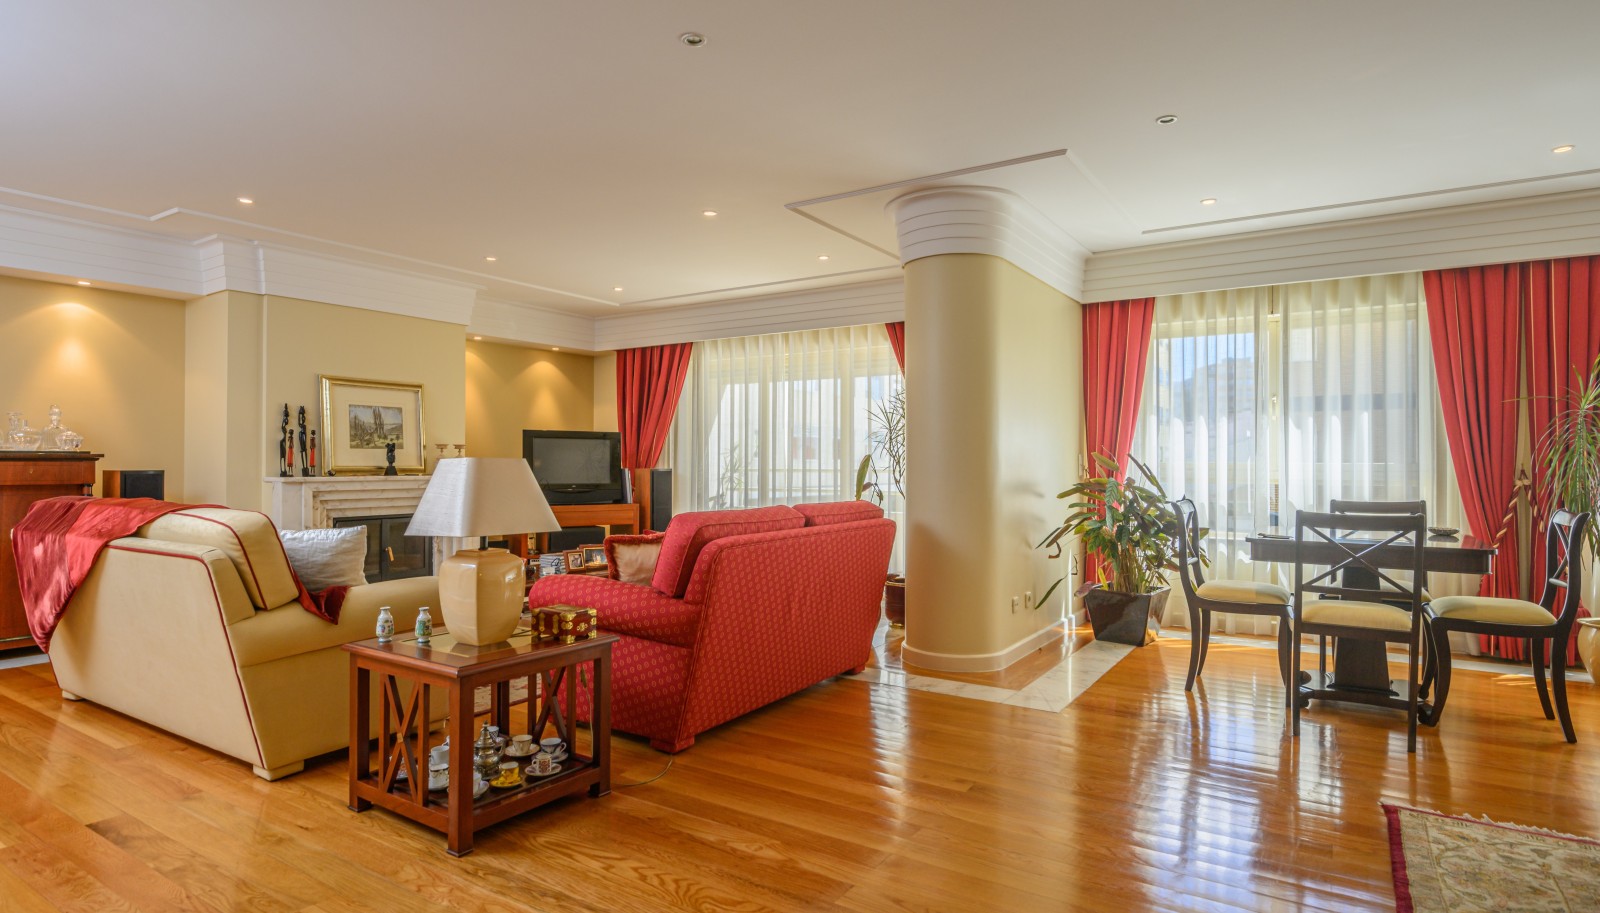 Appartement de 5 chambres avec balcon, à vendre, à V. N. Gaia, Porto, Portugal_236340